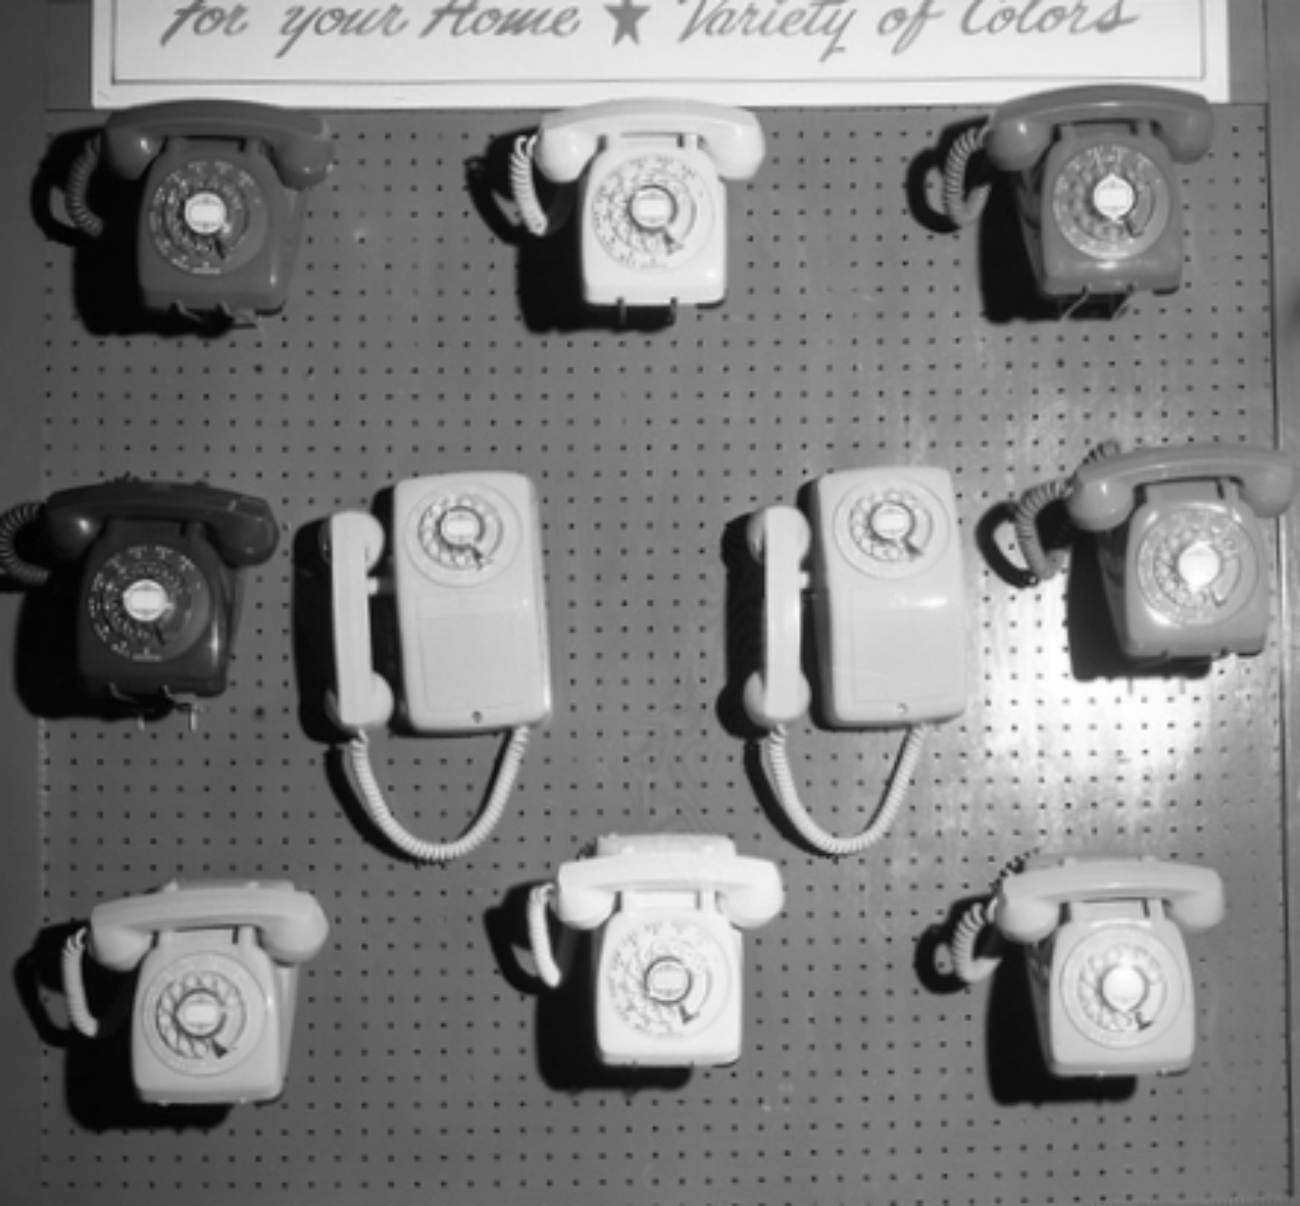 phones on pegboard display 1950s